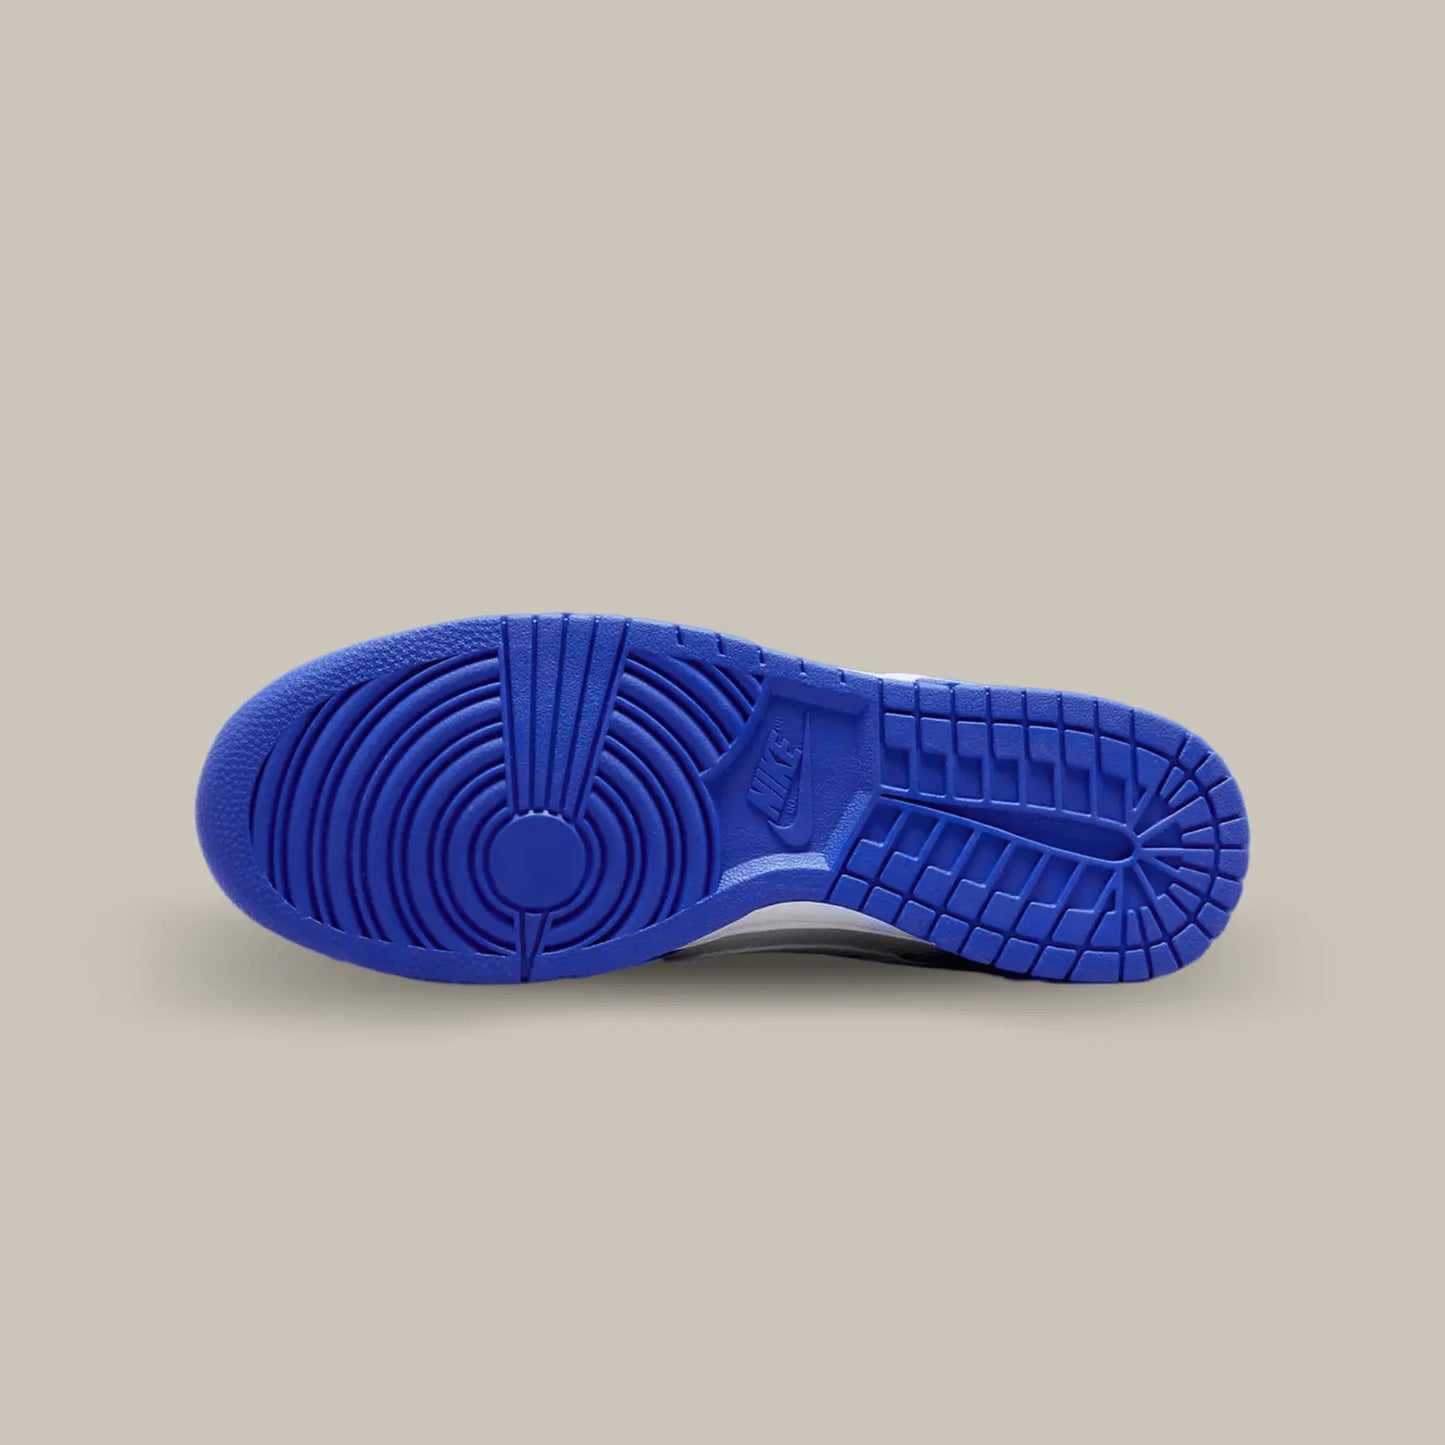 La semelle de la Nike Dunk Low Kentucky Alternate de couleur bleu.